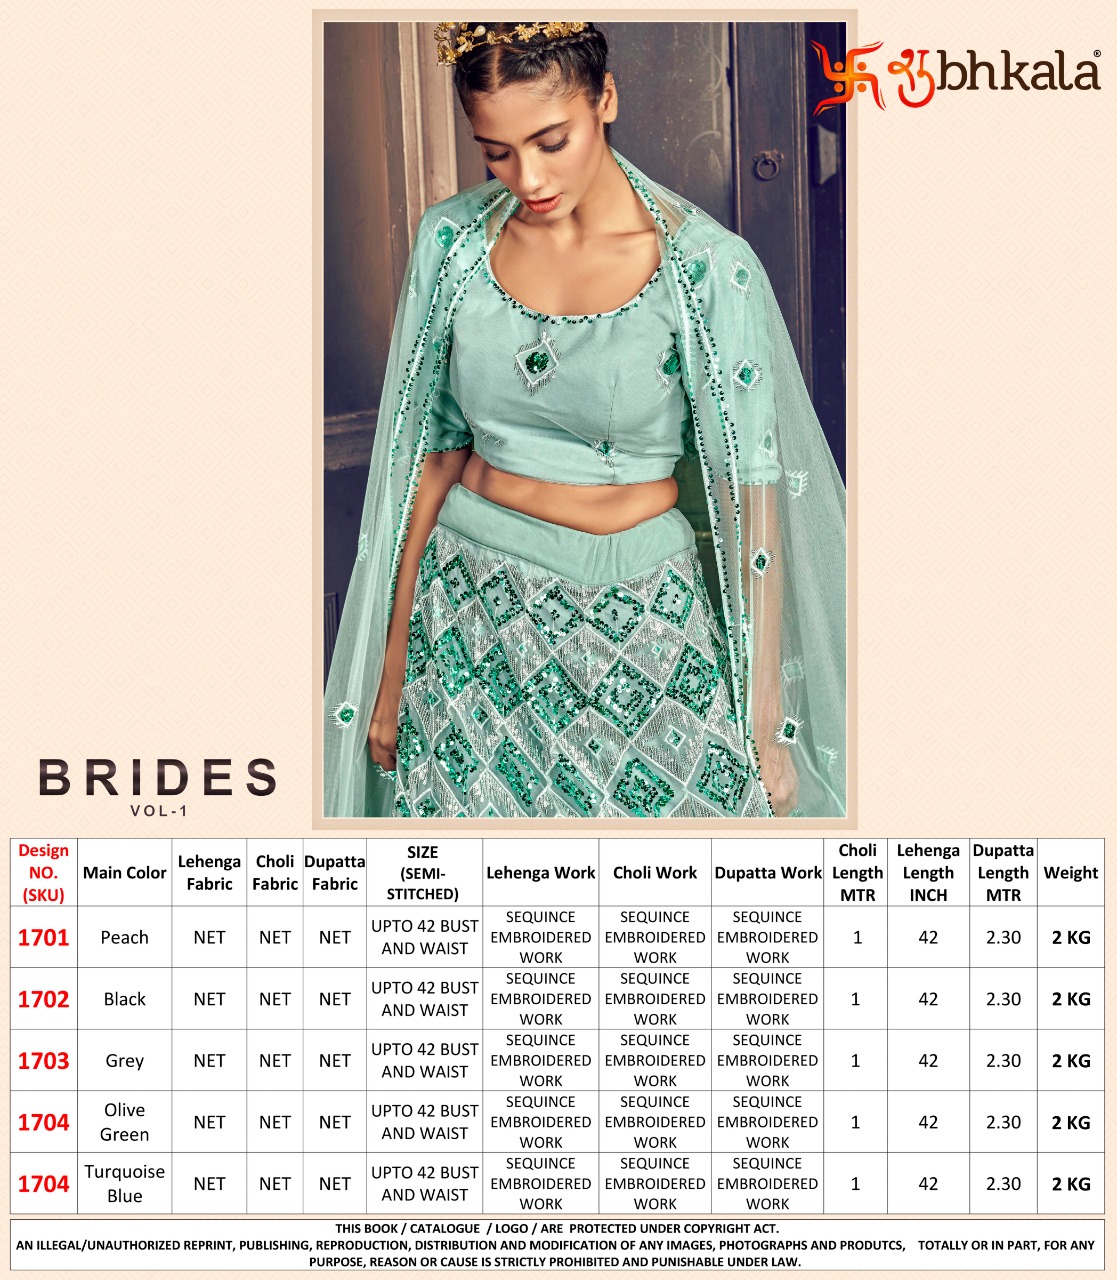 Shubhkala Brides Vol 1 1701-1705 Series Party Wear Bridal Lehenga Collection Wholesale Price